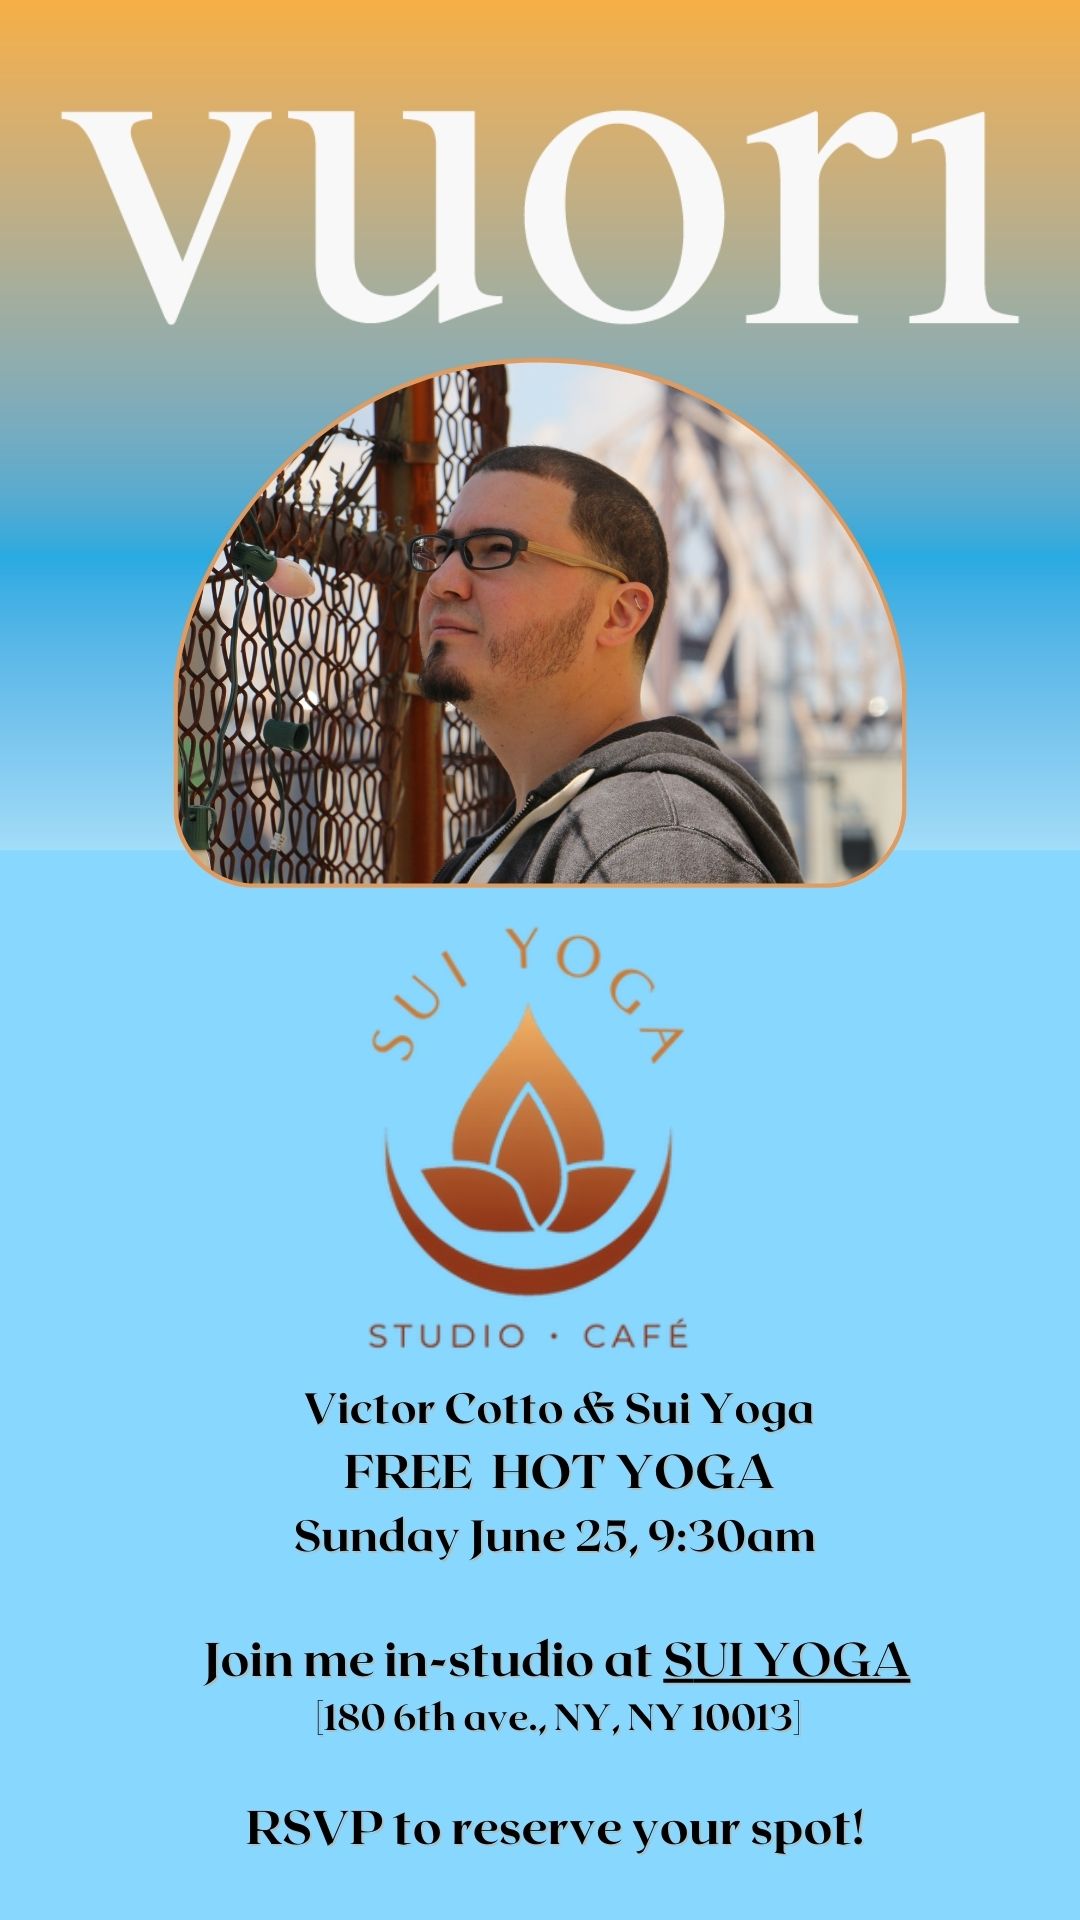 Victor Cotto Sui Yoga, NYC Best Yoga Teacher, FREE NYC YOGA, Vuori Clothing, ClassPass™, Free Yoga Class, Vuori Event